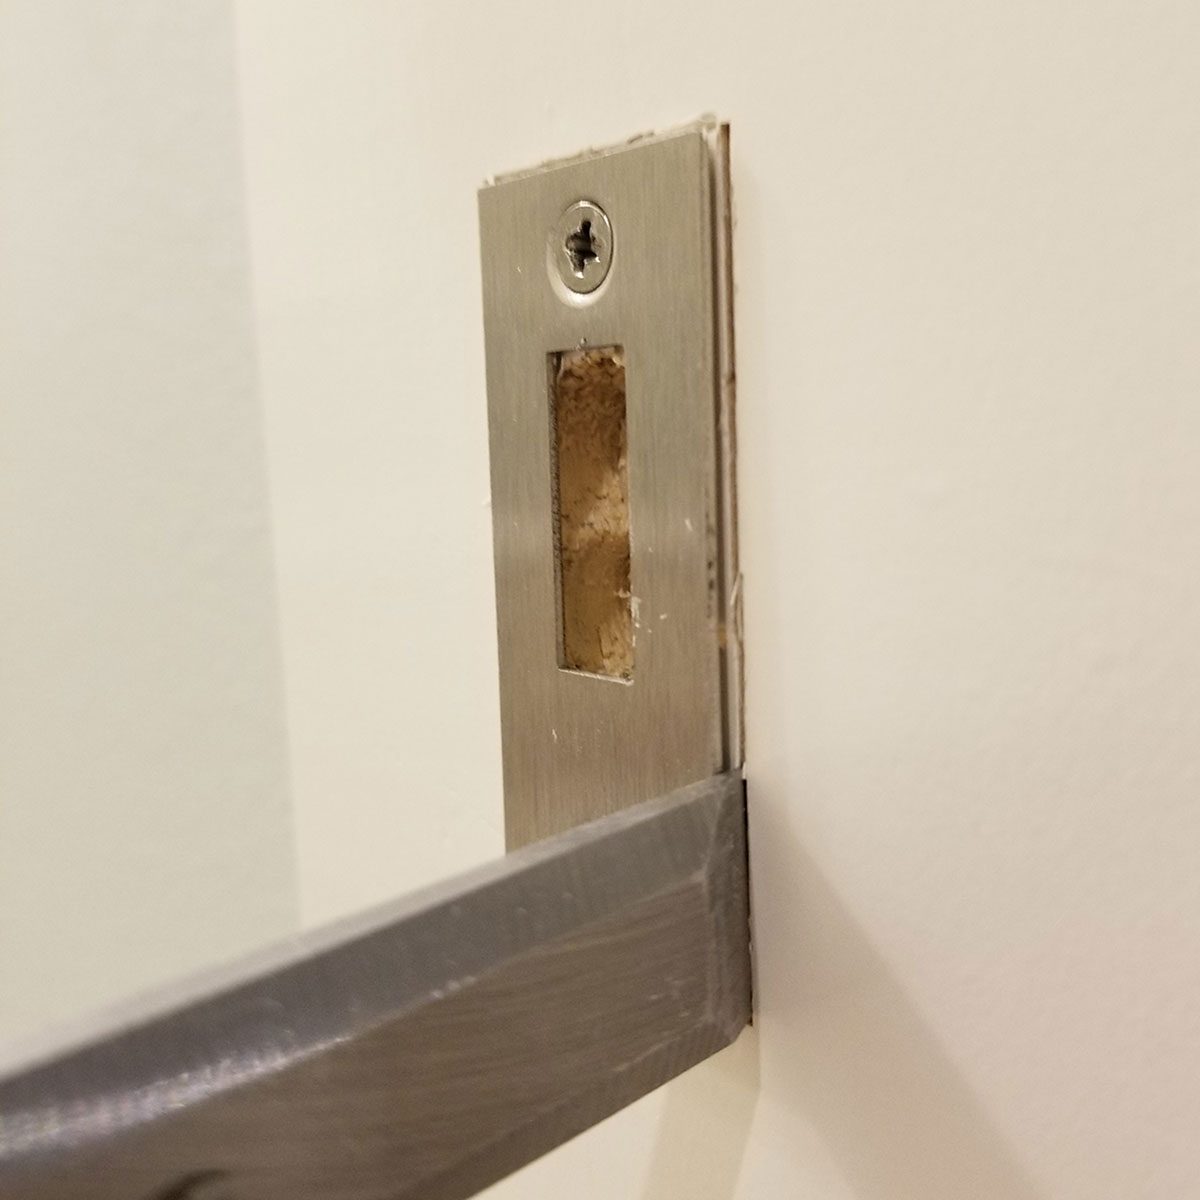 How to Install: Round Pocket Door Lock, YE Series